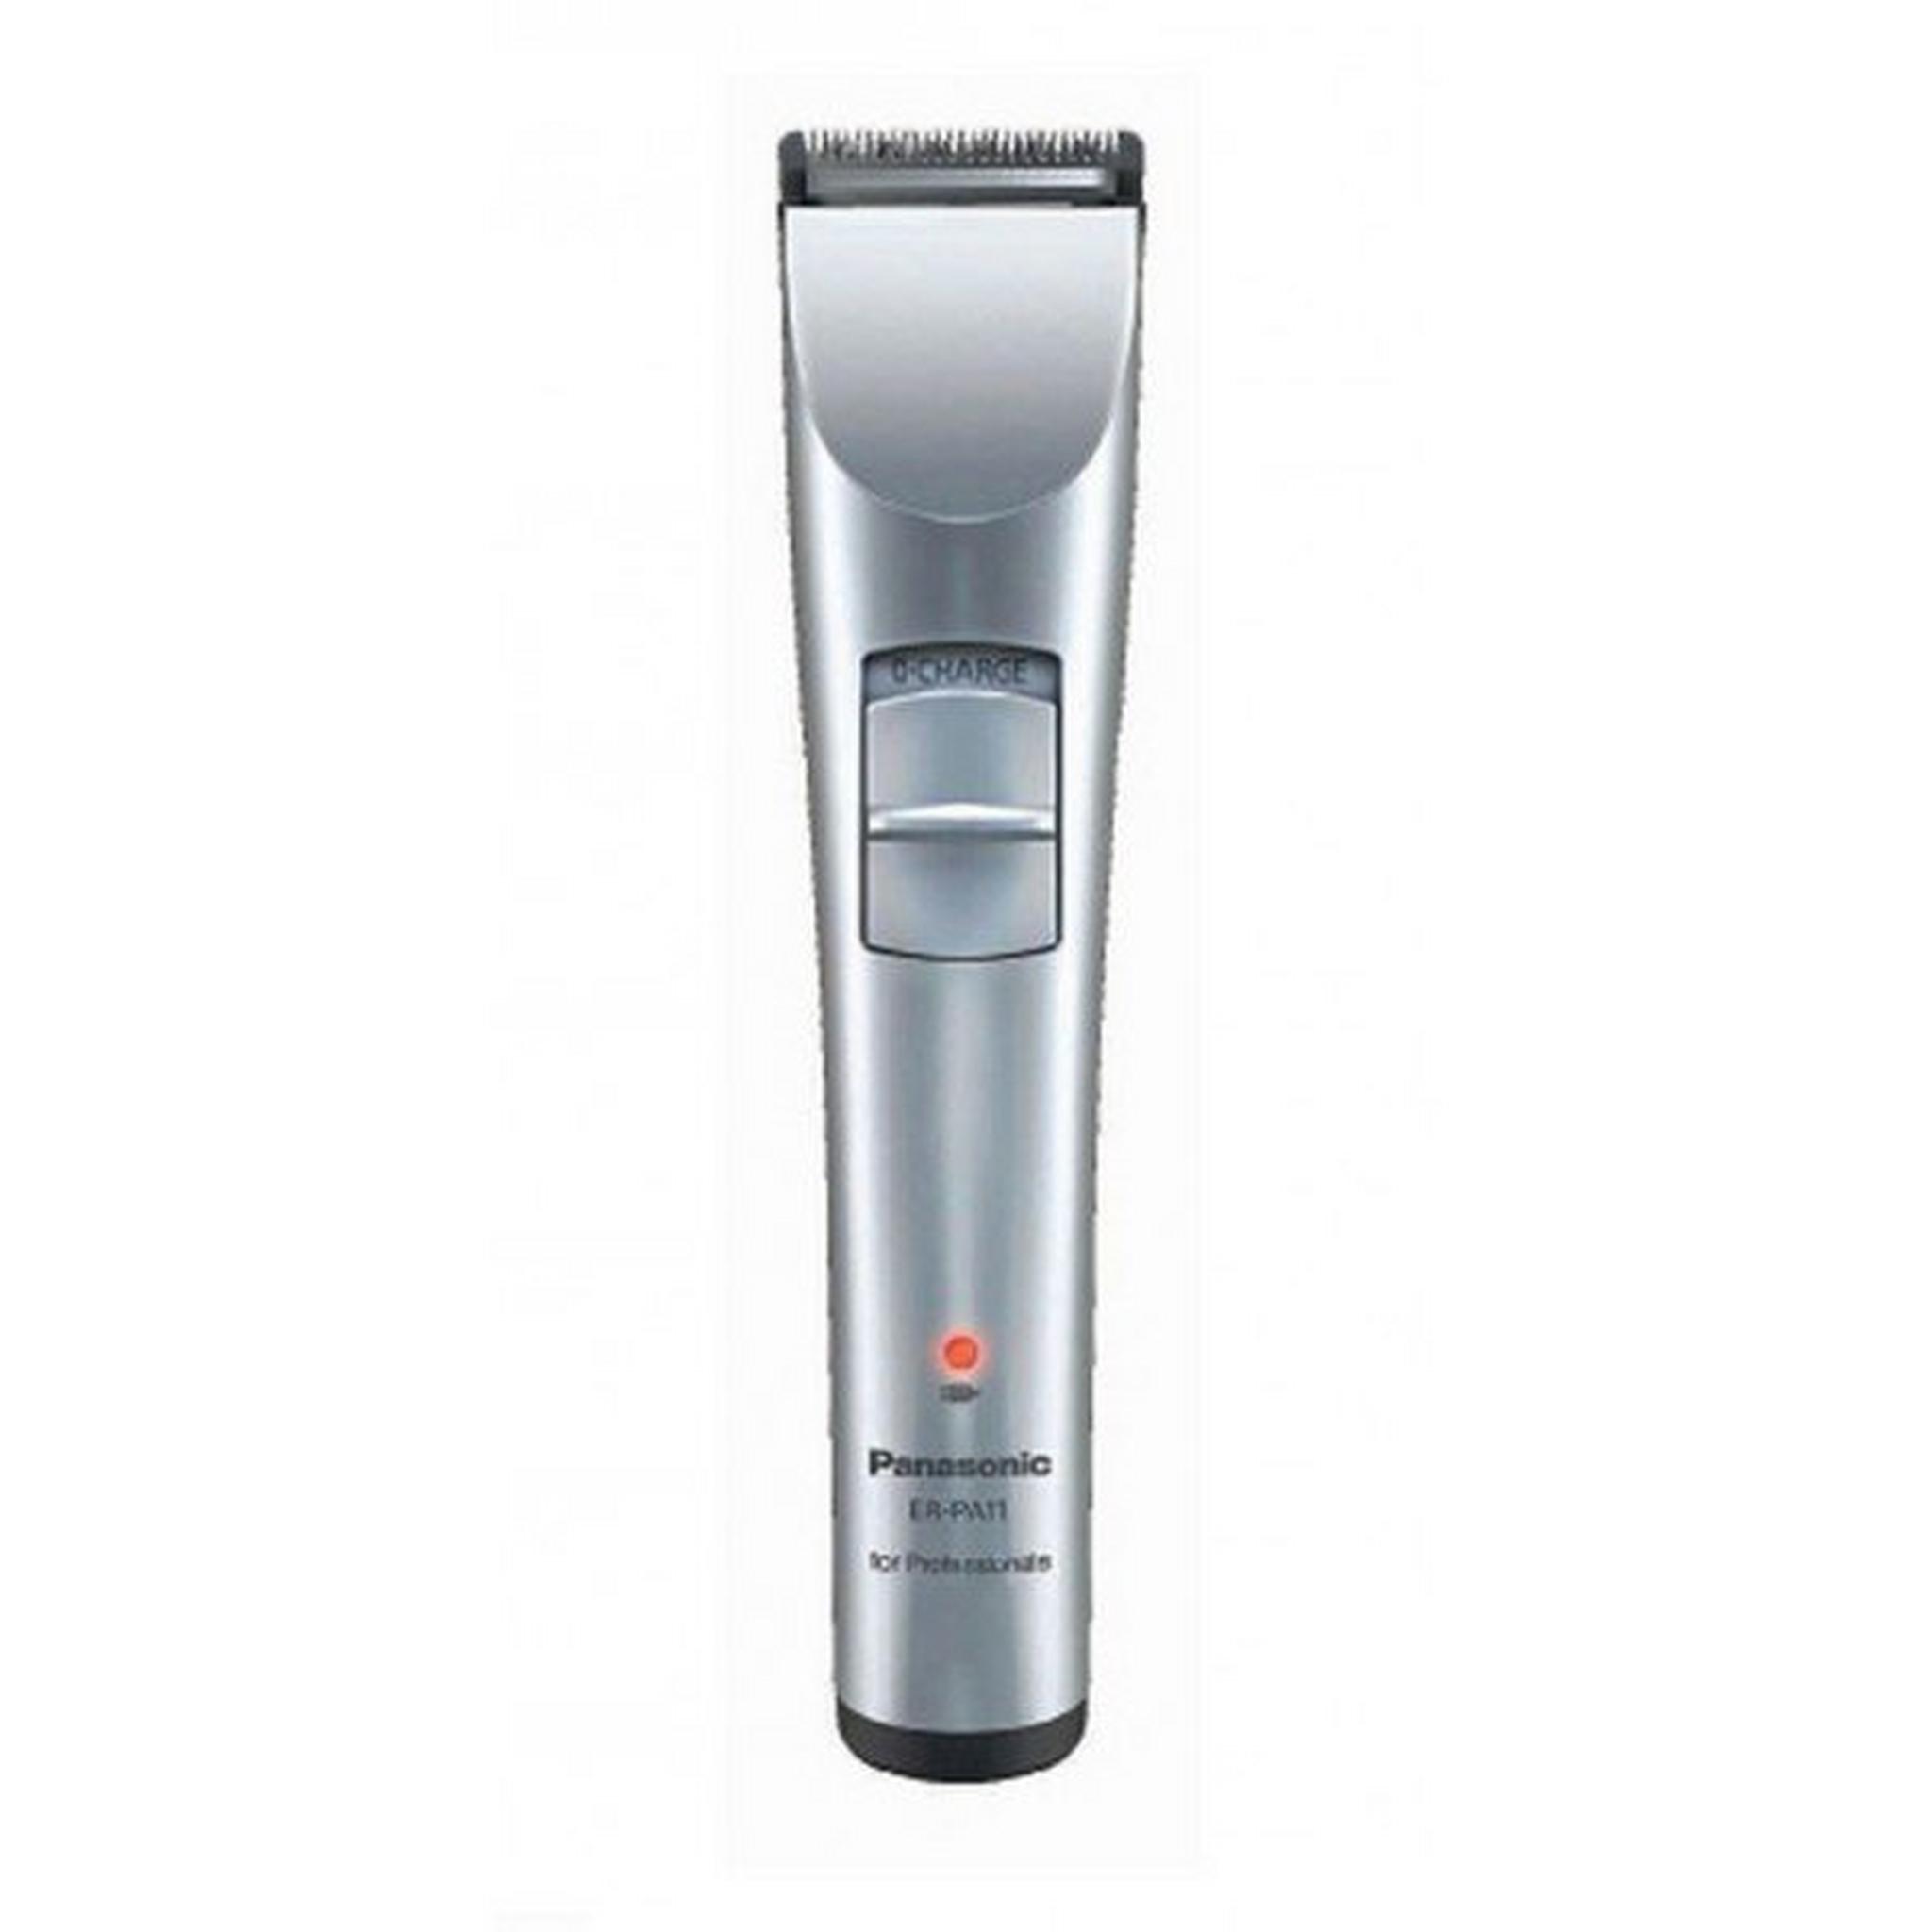 Panasonic ER-PA10-S721 Professional Hair Trimmer